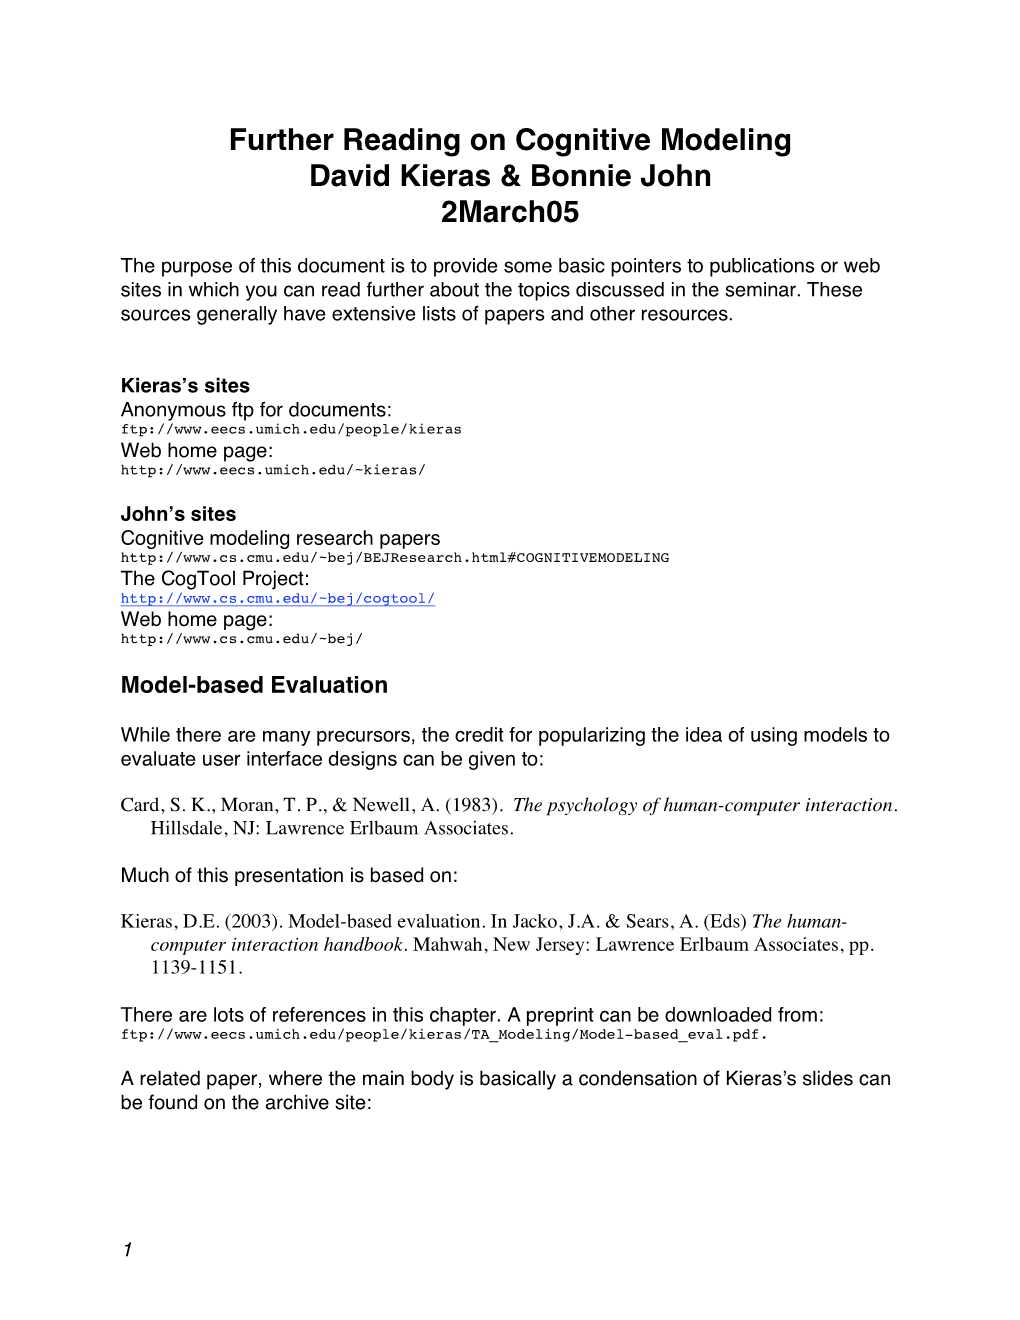 Further Reading on Cognitive Modeling David Kieras & Bonnie